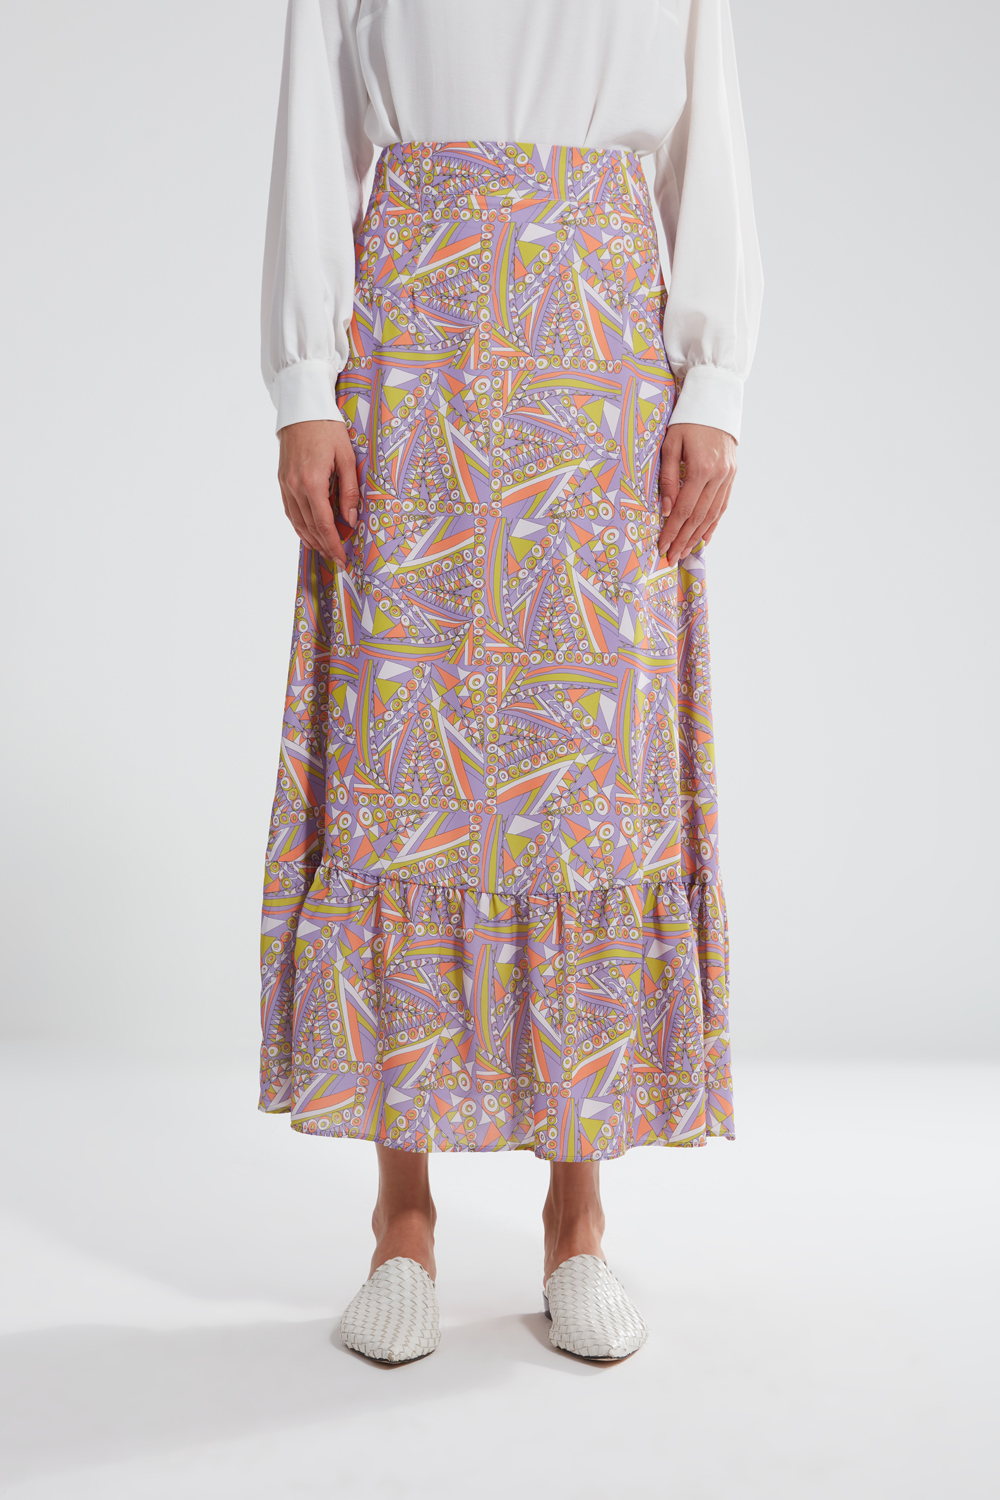 Digital Patterned Ruffle Skirt